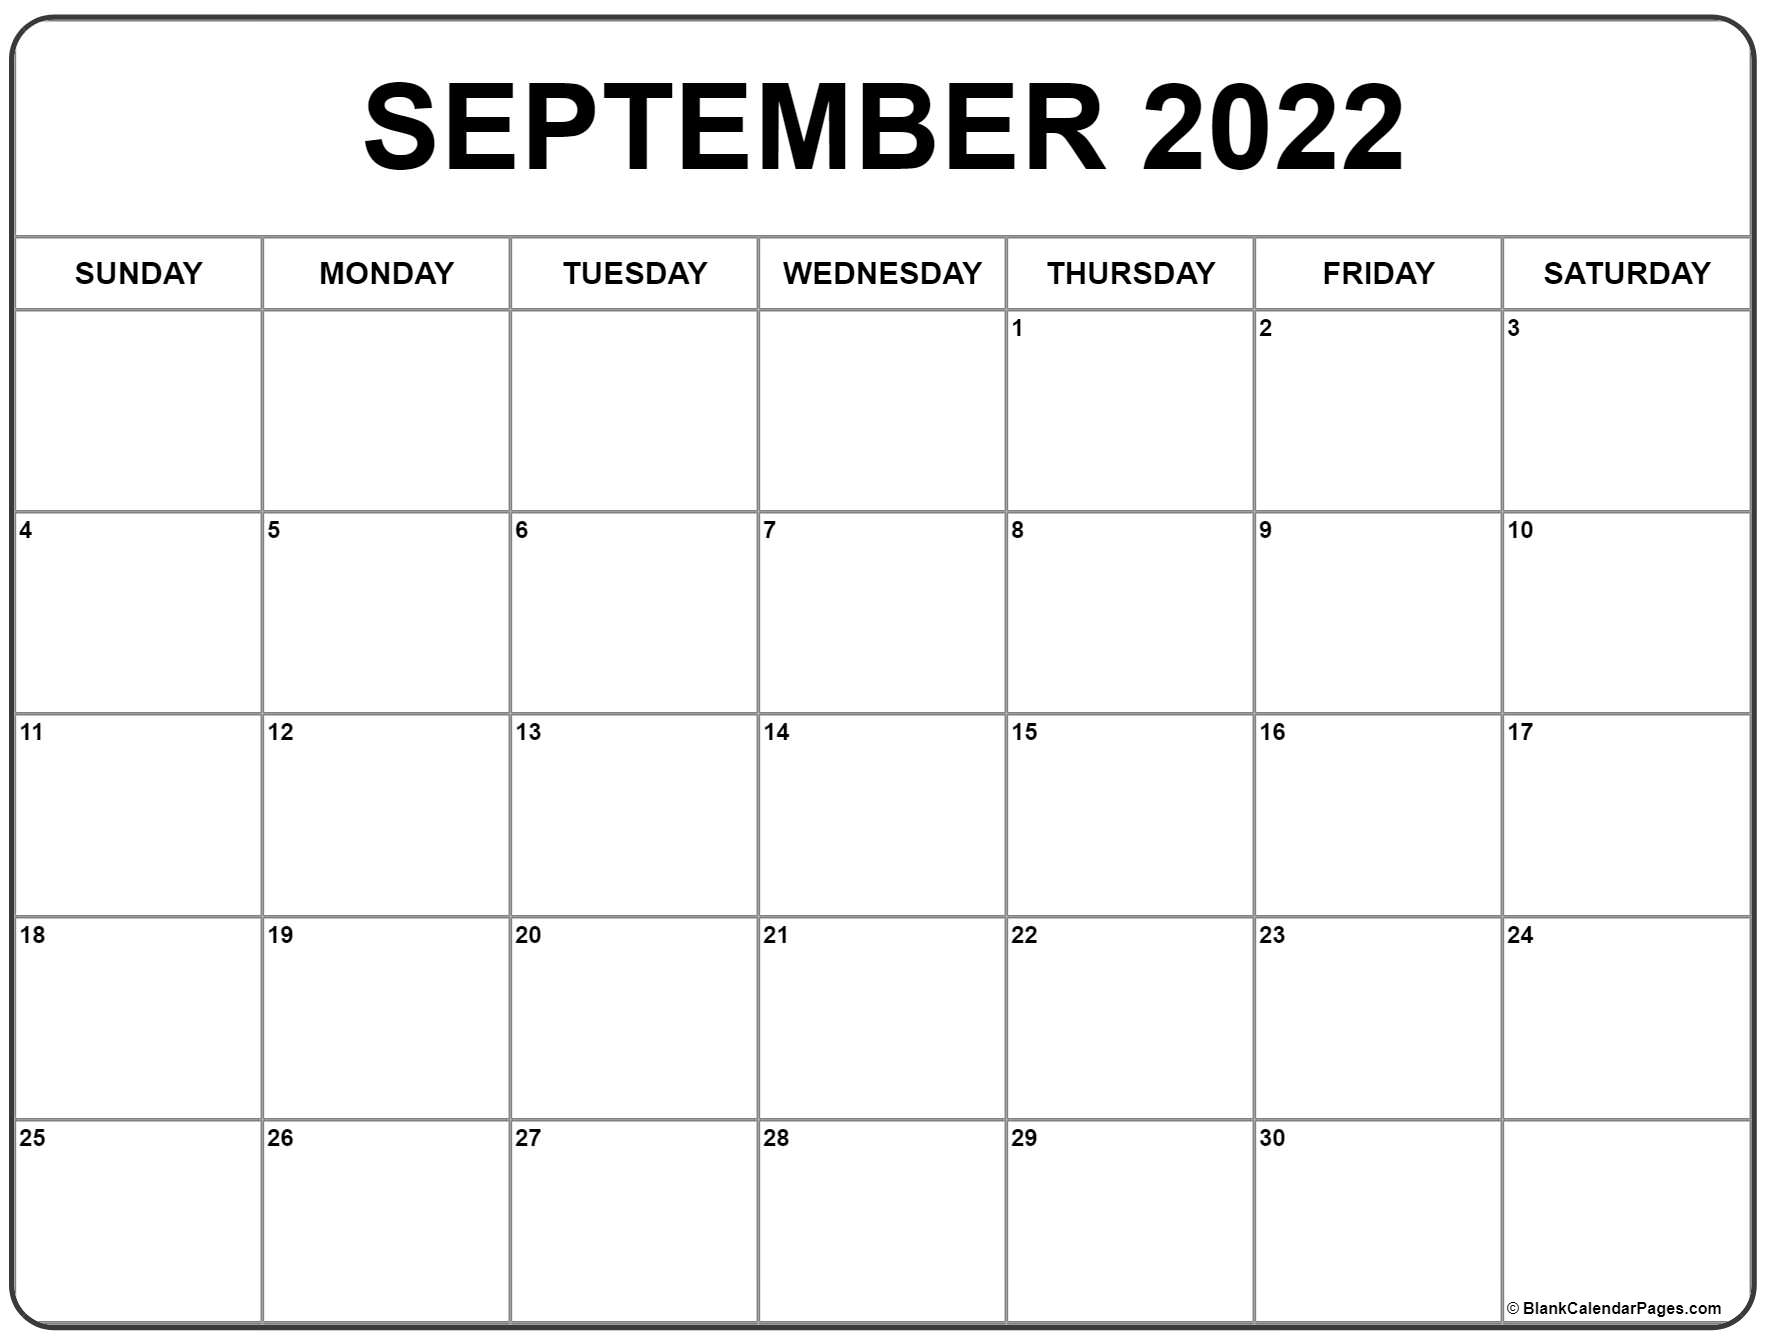 September 2022 Calendar | Free Printable Calendar Templates inside Calendar September 2022 To August 2022